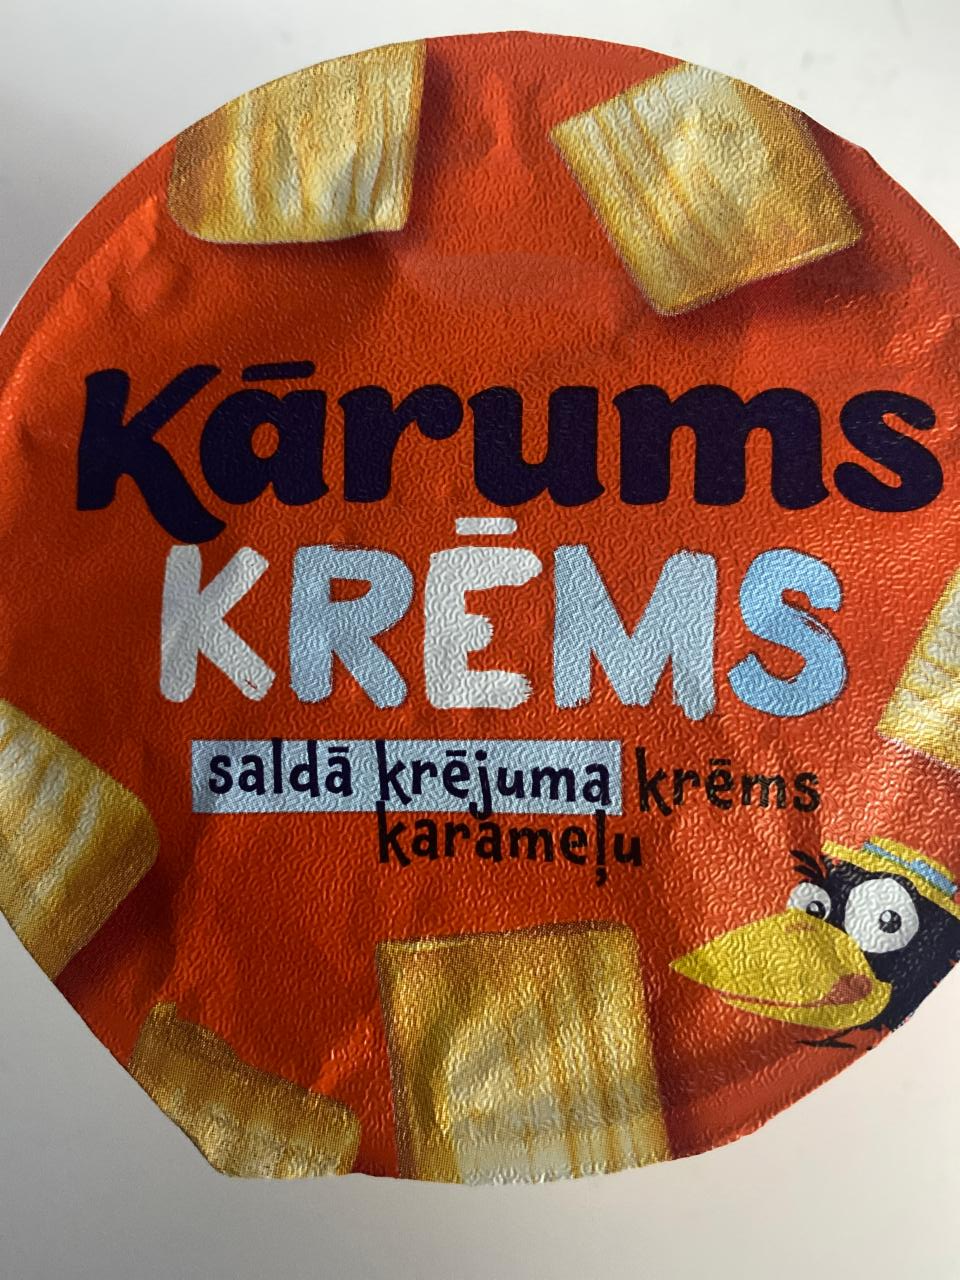 Фото - Крем с карамелью krems karamelu Karums